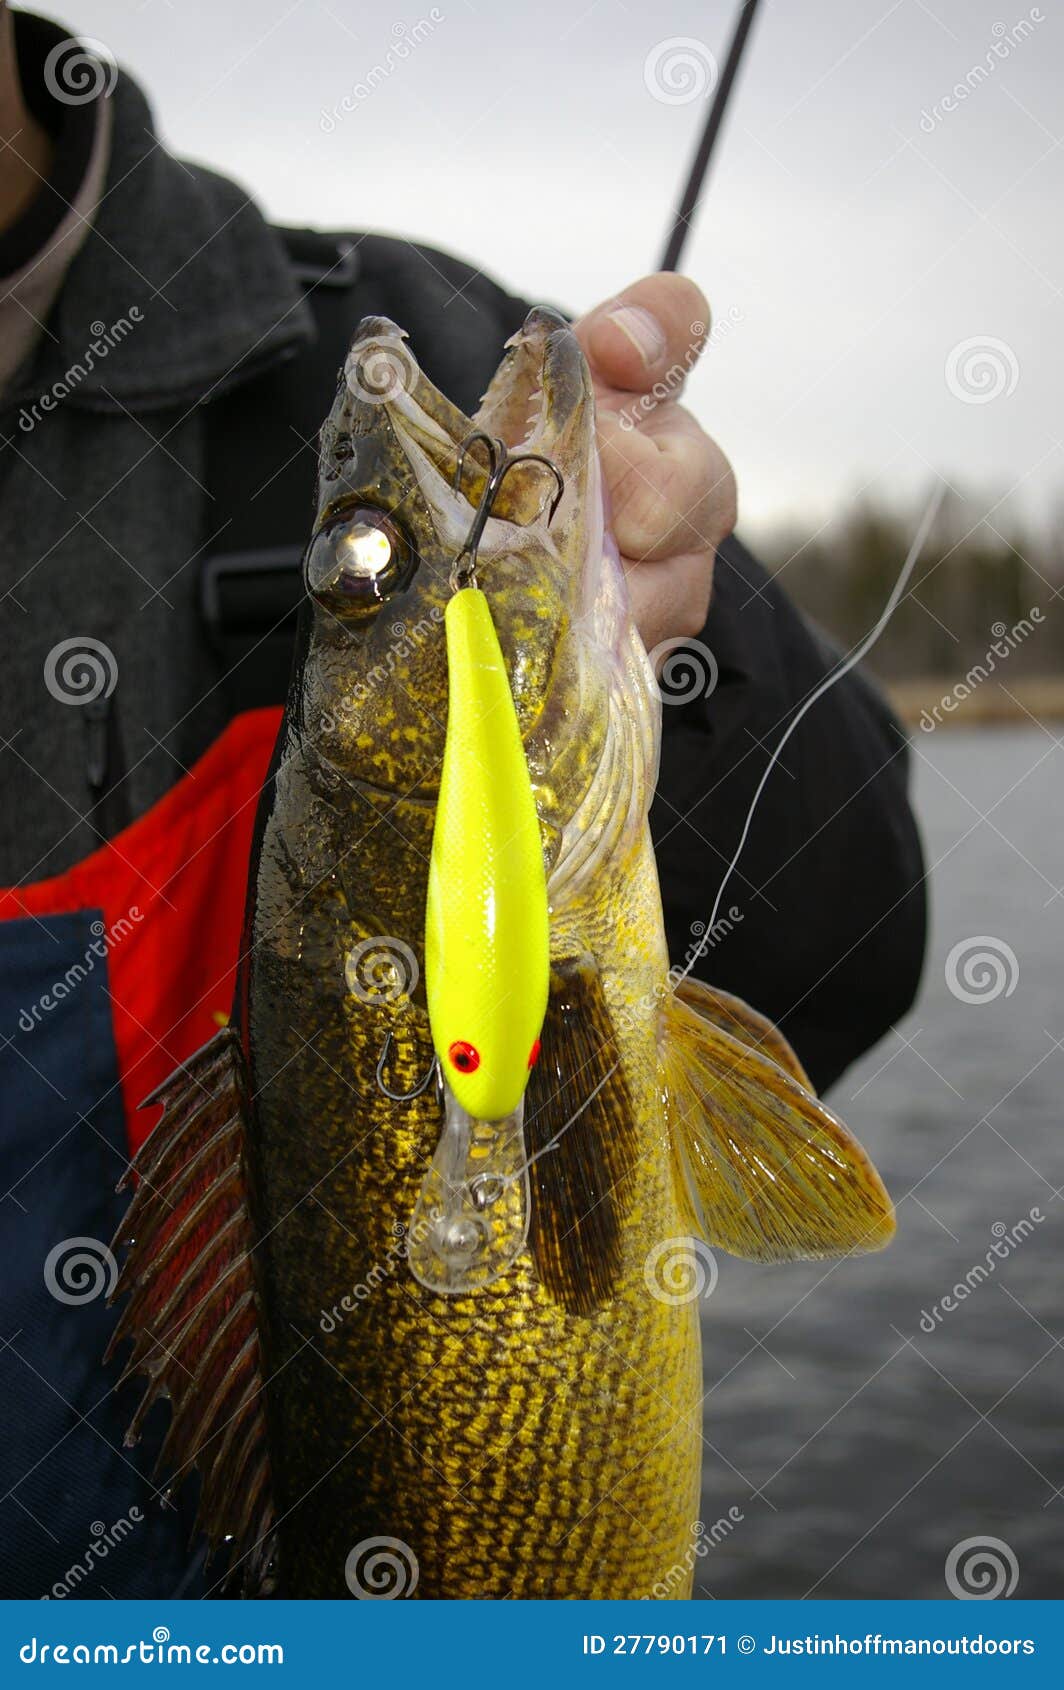 Walleye Fishing Crankbait stock image. Image of marble - 27790171